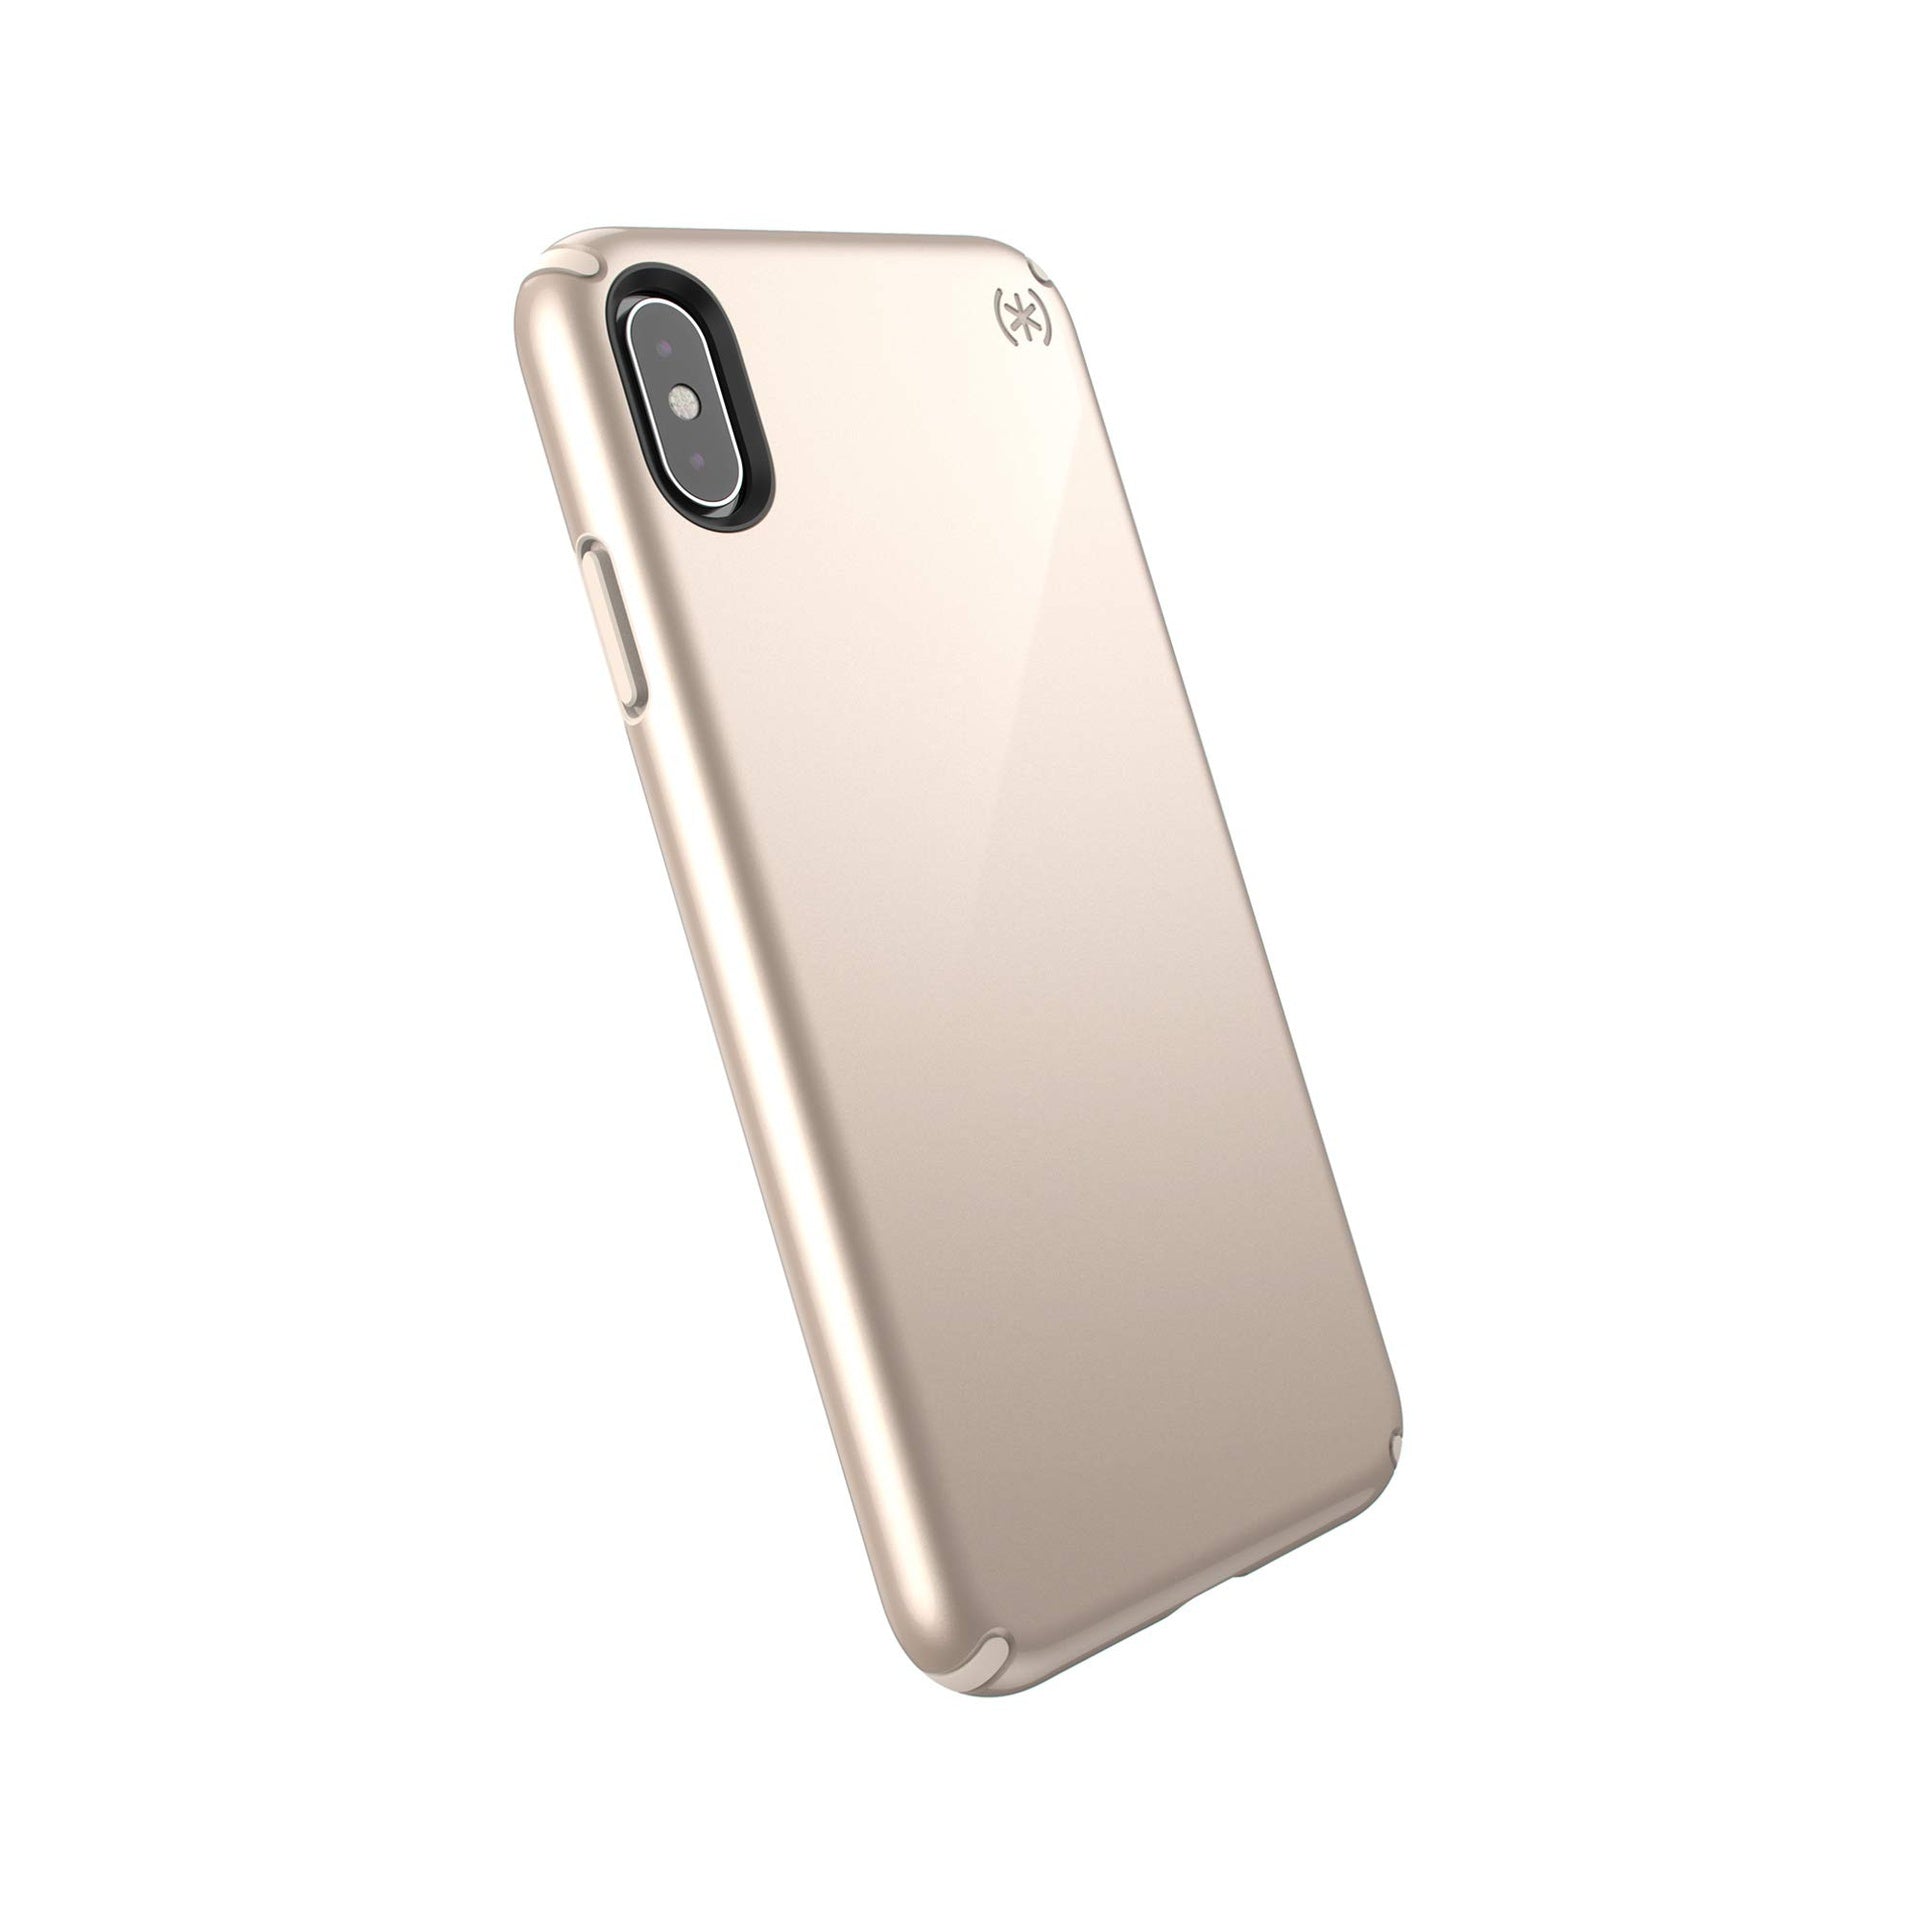 Speck Products Presidio Metallic Iphone Xs Max Case, Nude Gold Metallic/Nude Gold